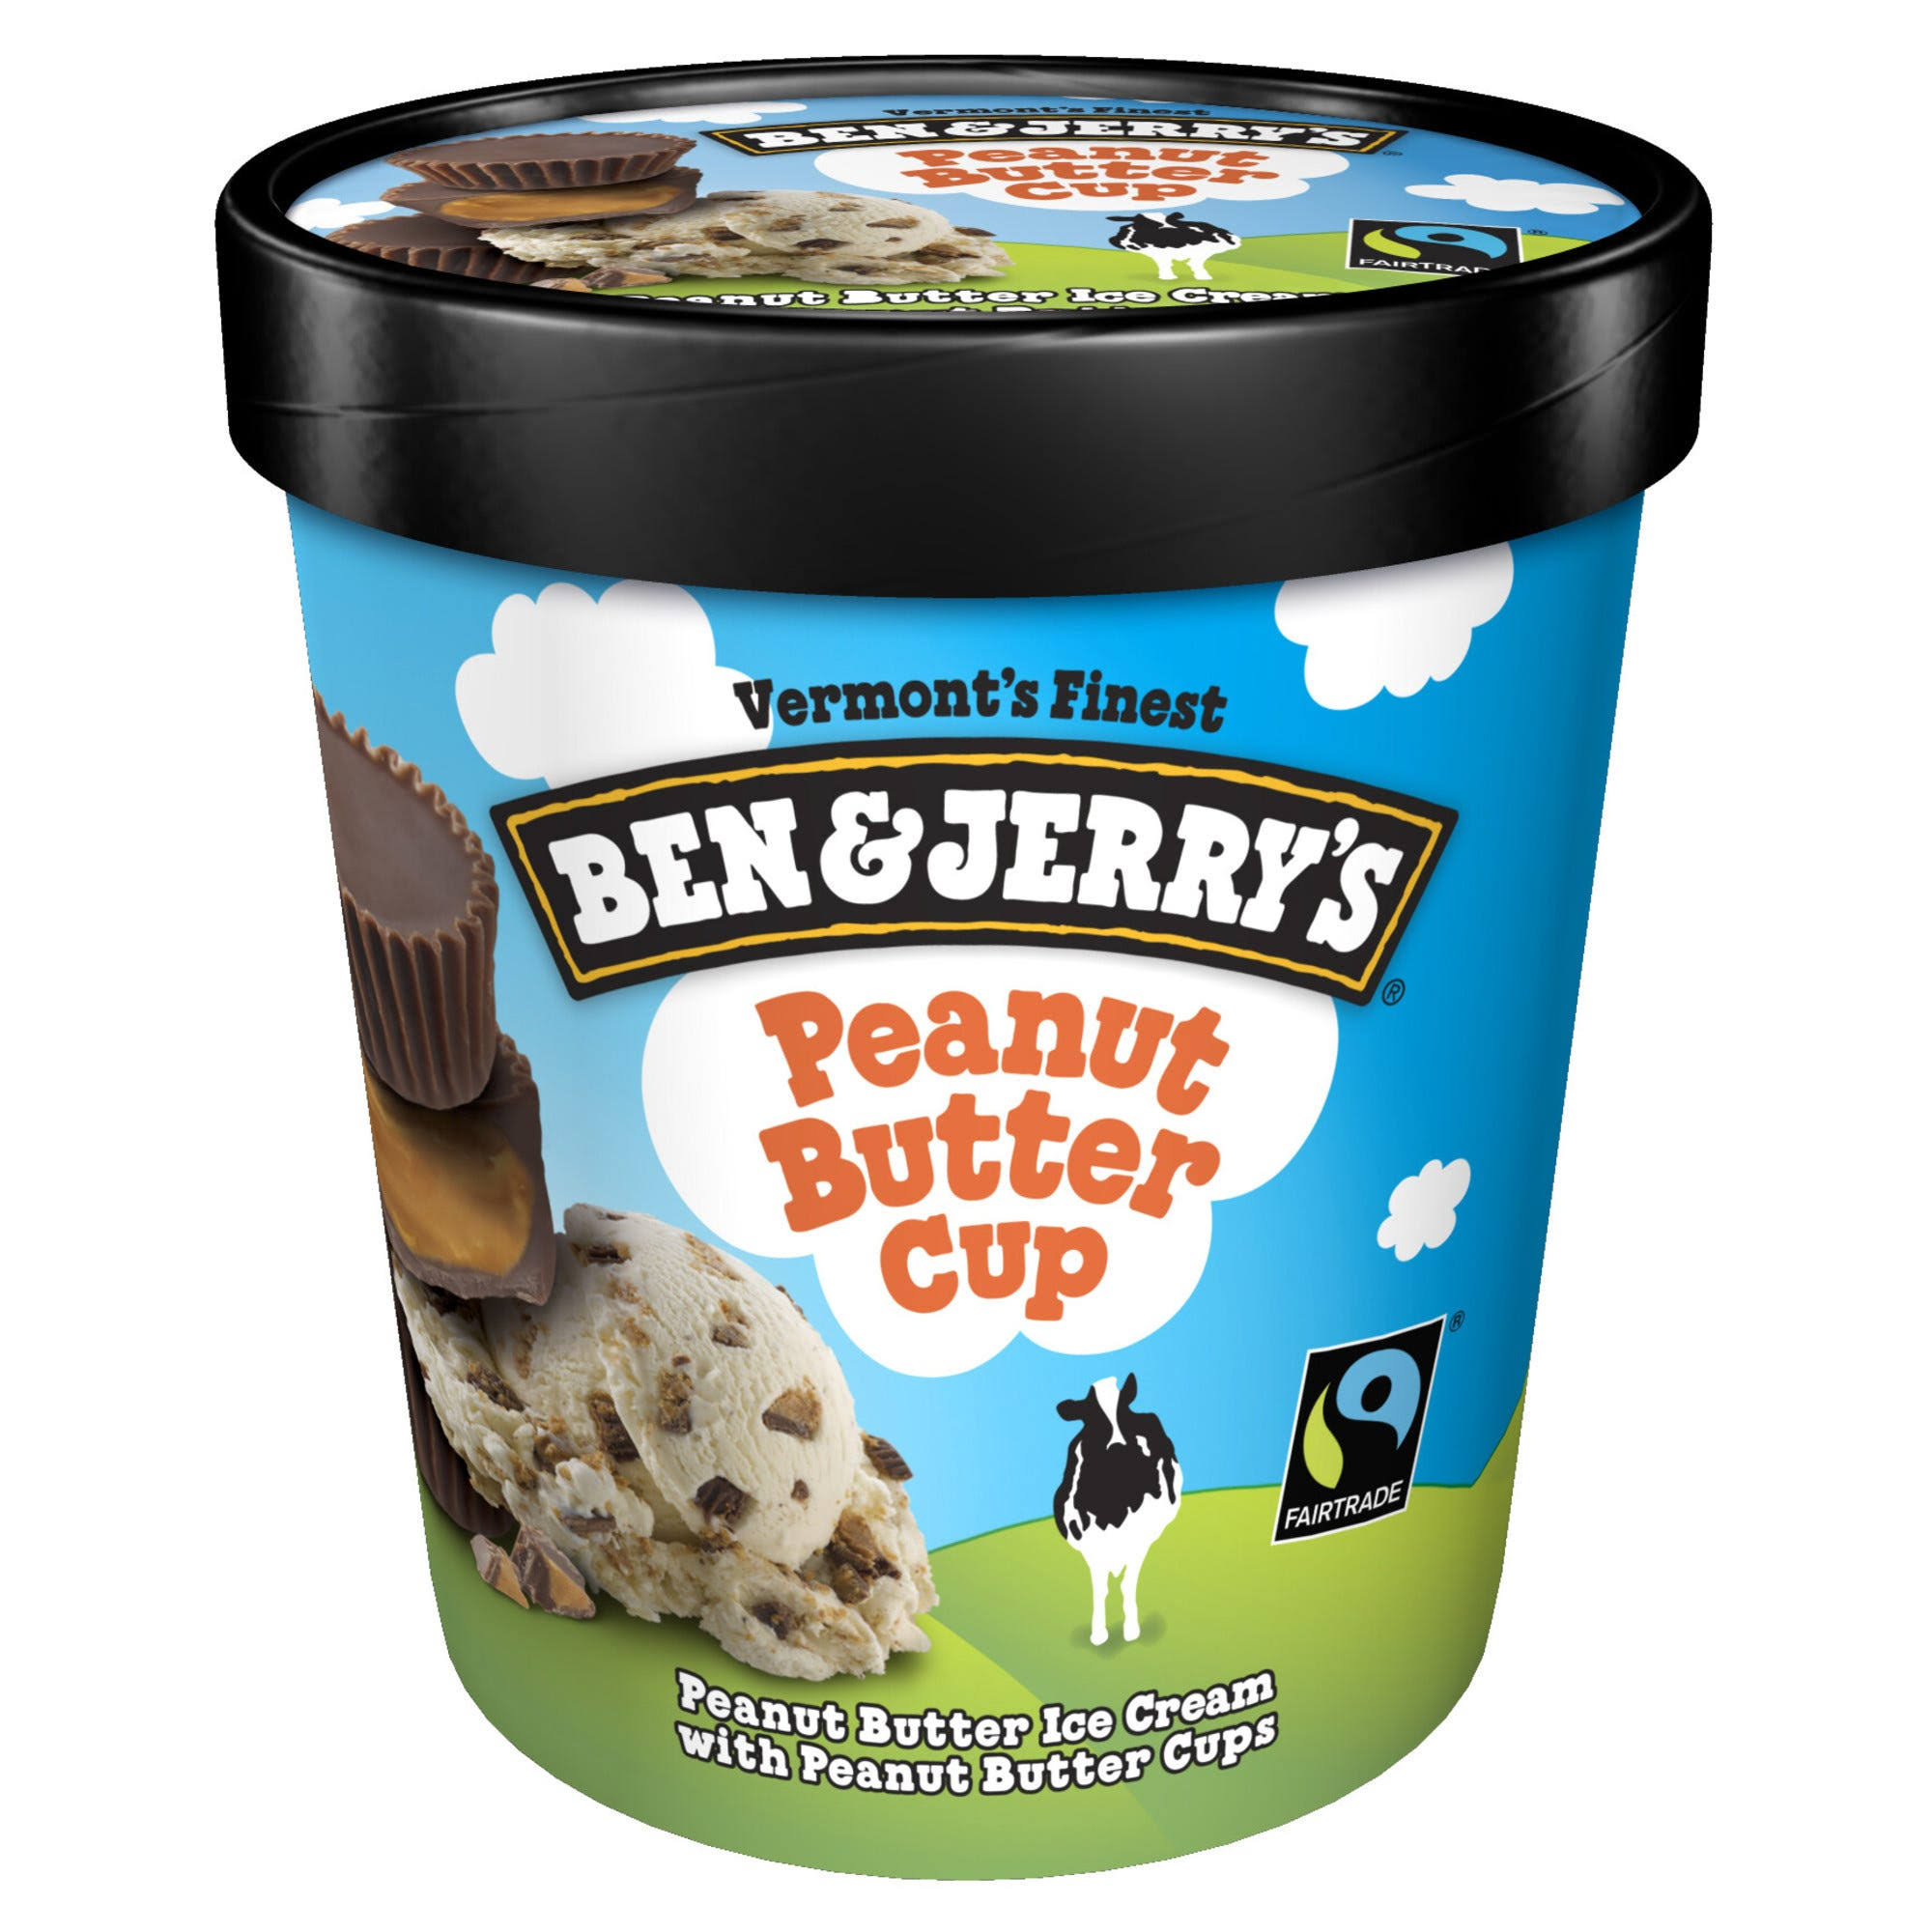 Ben & Jerry's Ice Cream - Peanut Butter Cup